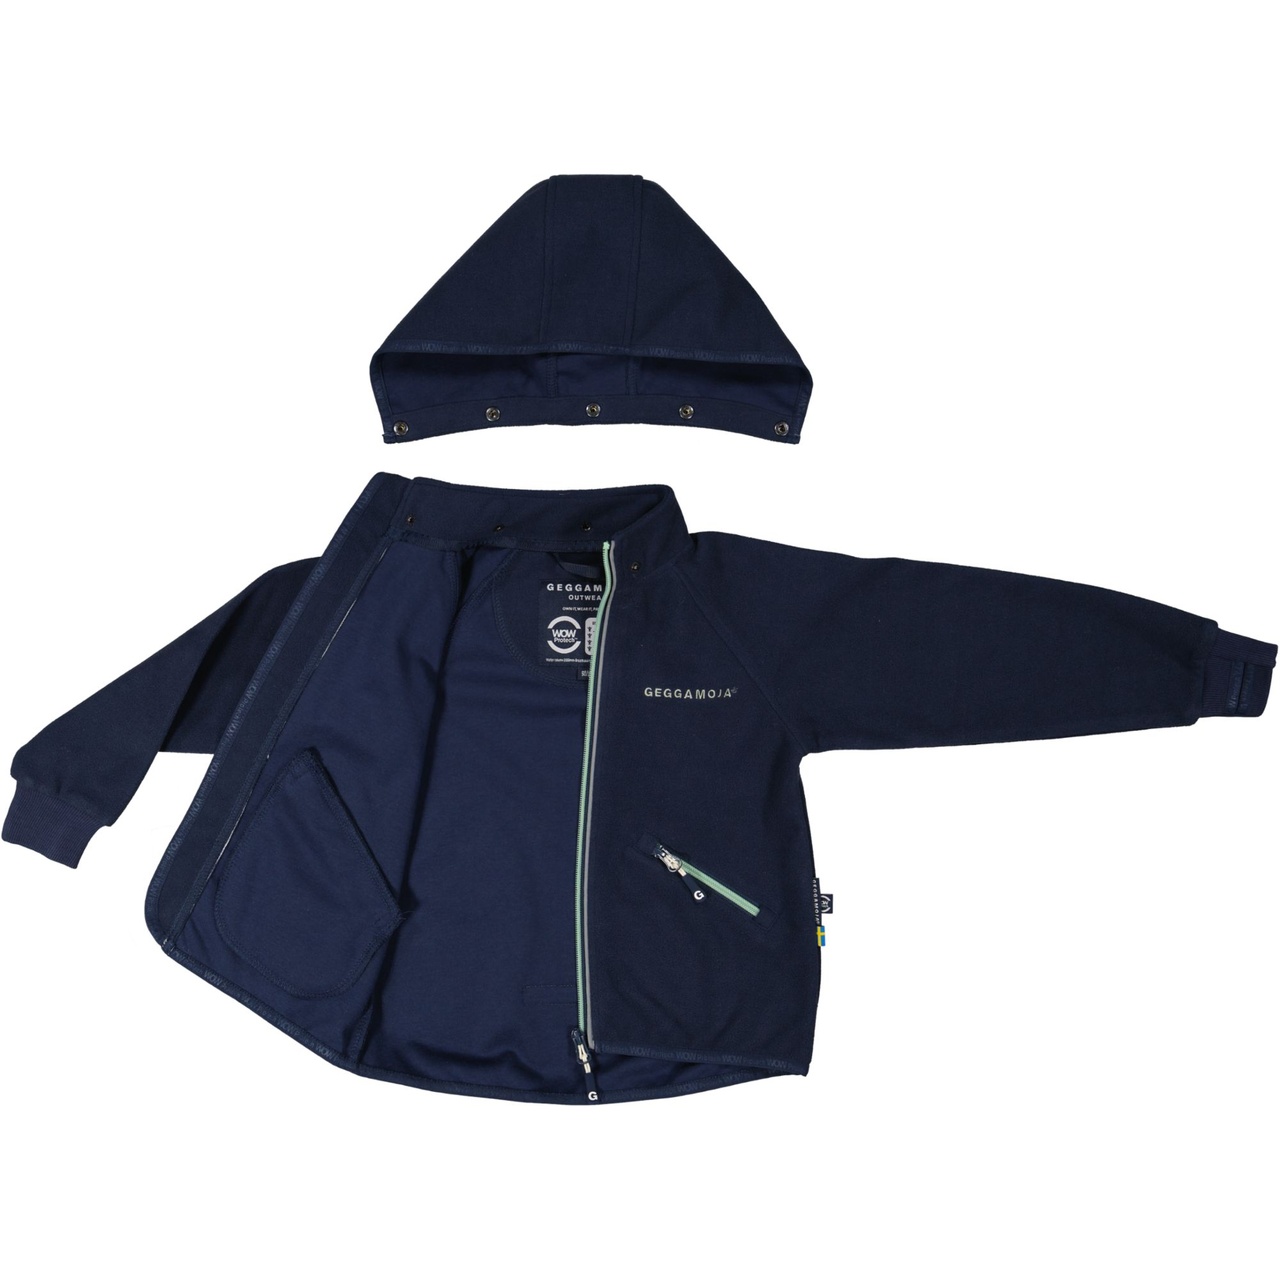 Wind fleece jacket Navy  134/140